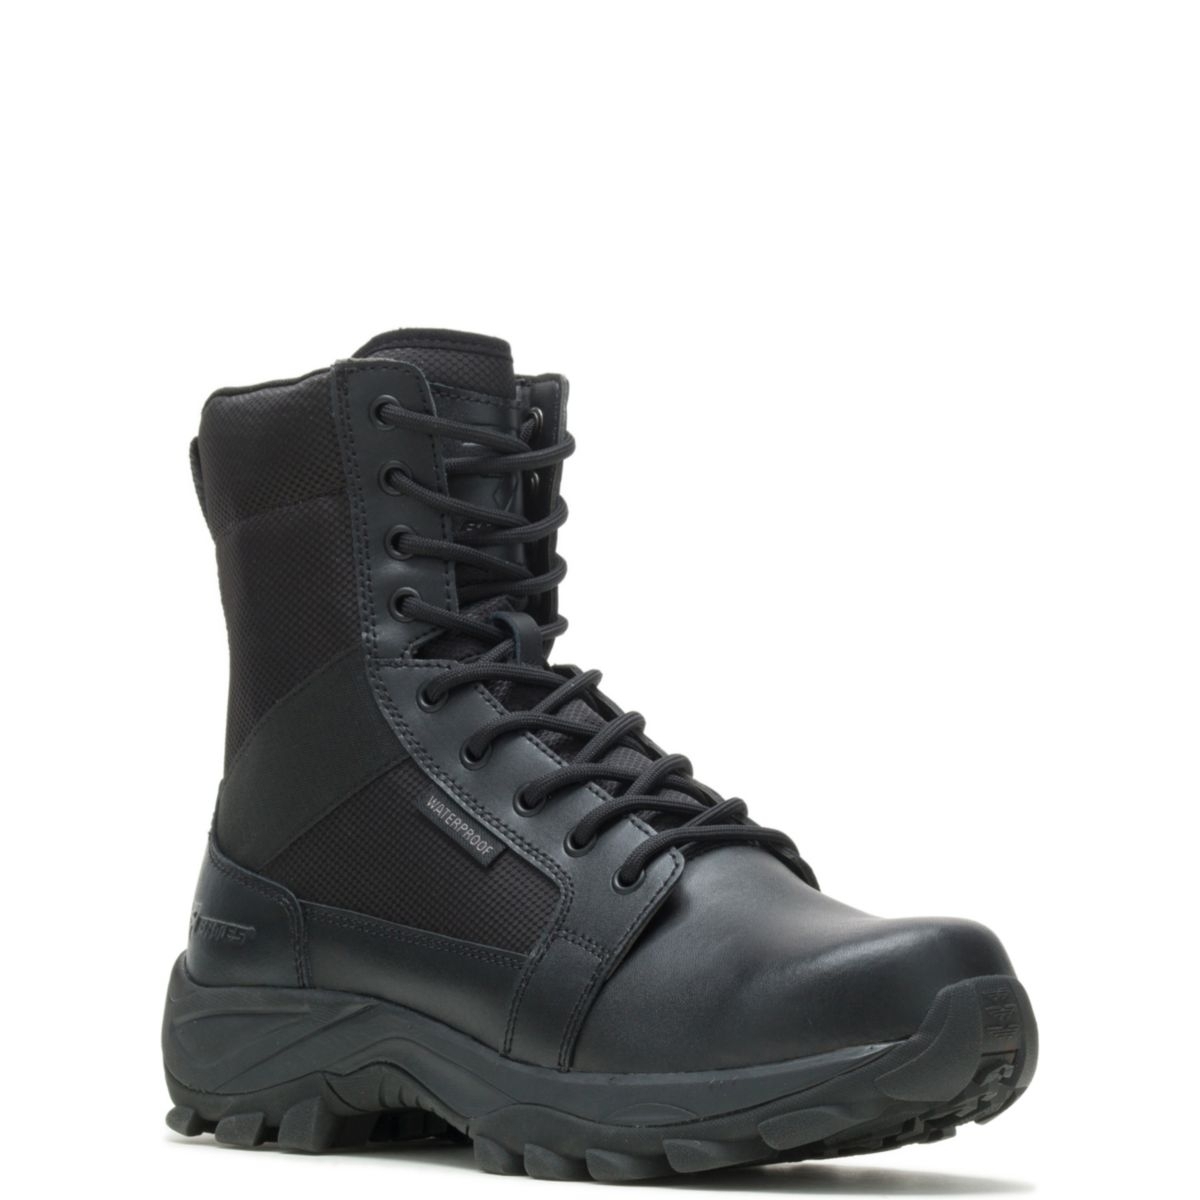 Bates Men's Fuse 8-inch Side Zip Waterproof Boot Black - E06508 BLACK - BLACK, 9.5